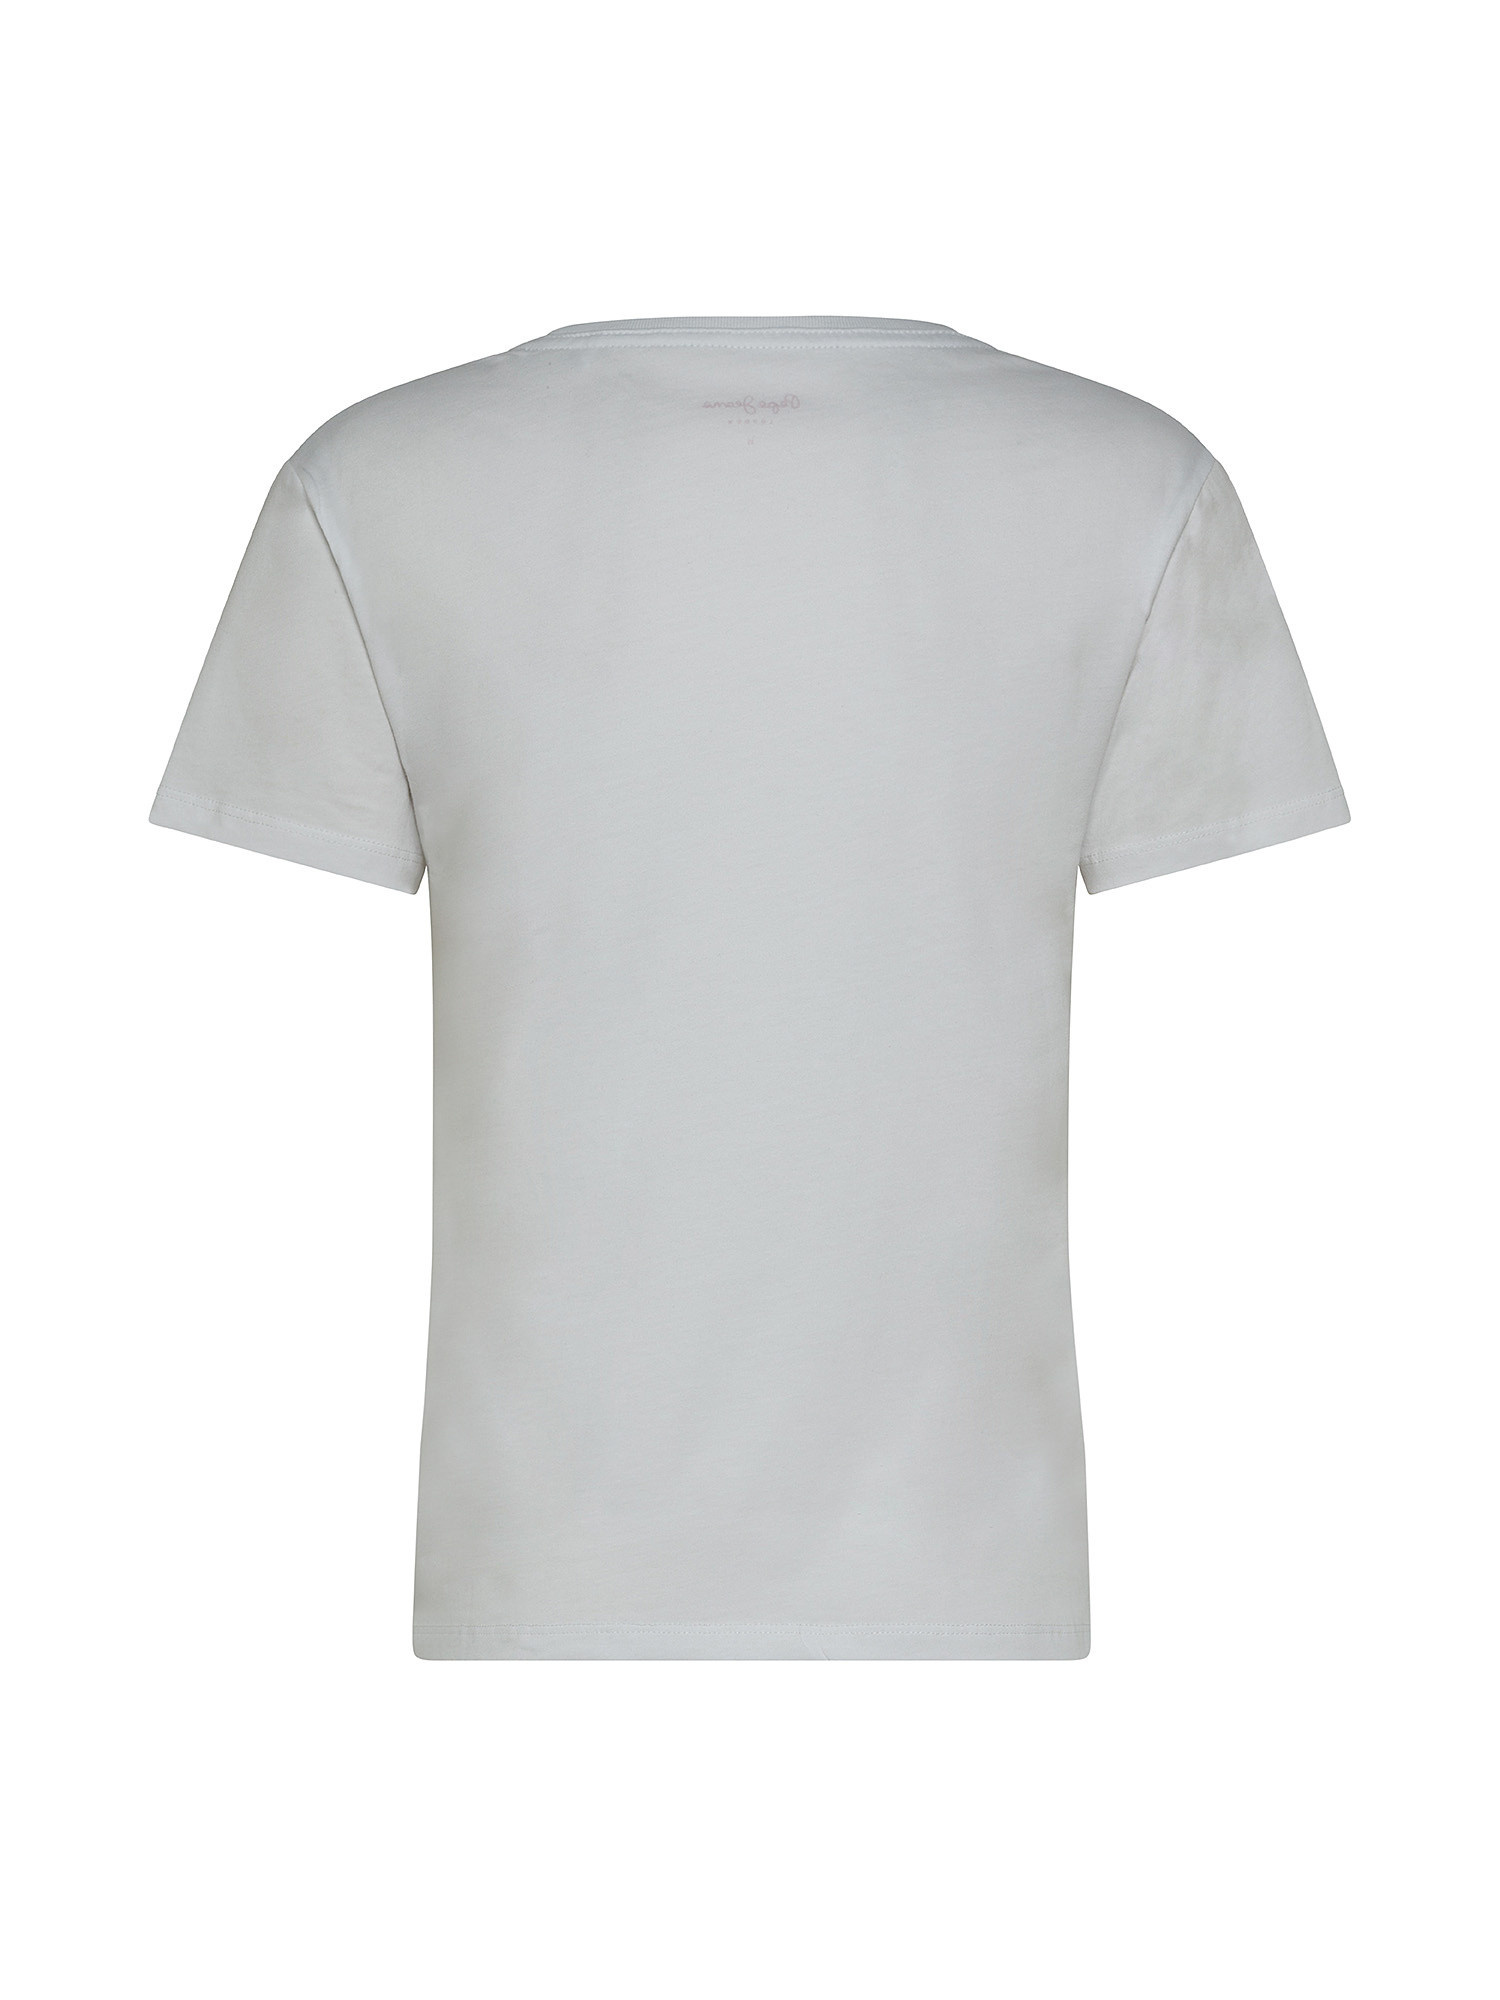 T-shirt con logo stampato, Bianco, large image number 1